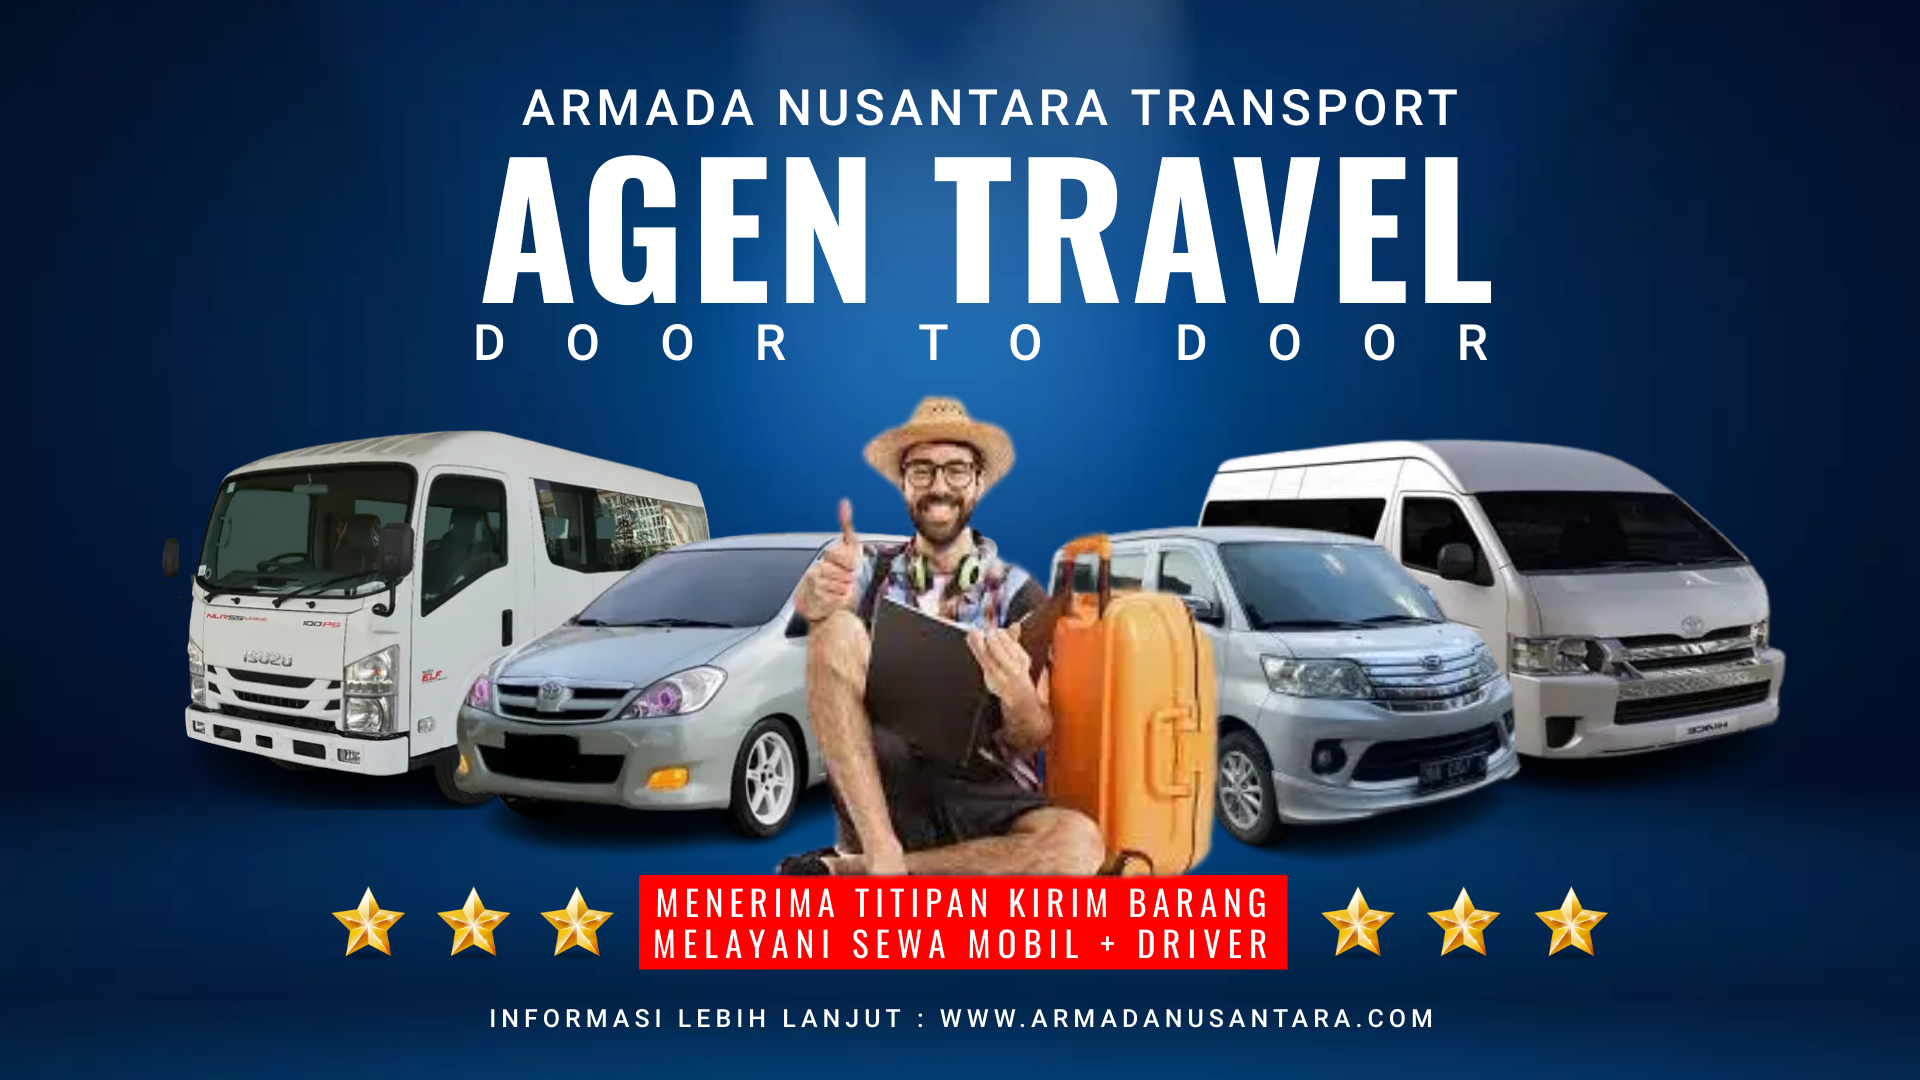 Pemesanan Tiket Travel, Pengiriman Barang & Sewa Mobil + Driver